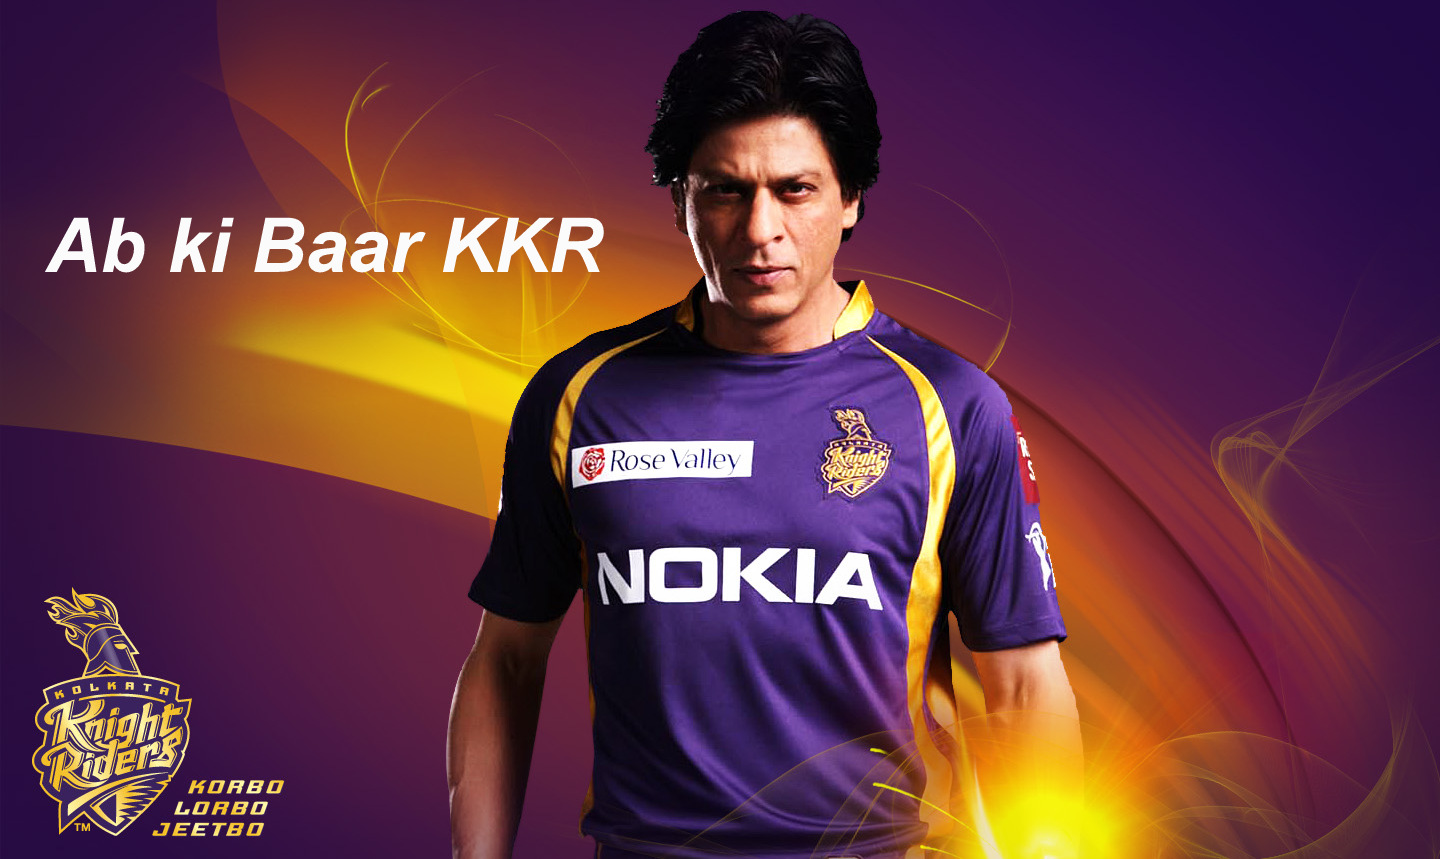 Shahrukh-Khan-srk-IPL-kkr-kolkota-knight-riders-jersey-poster-wallpaper-images-pictures-pics-photos